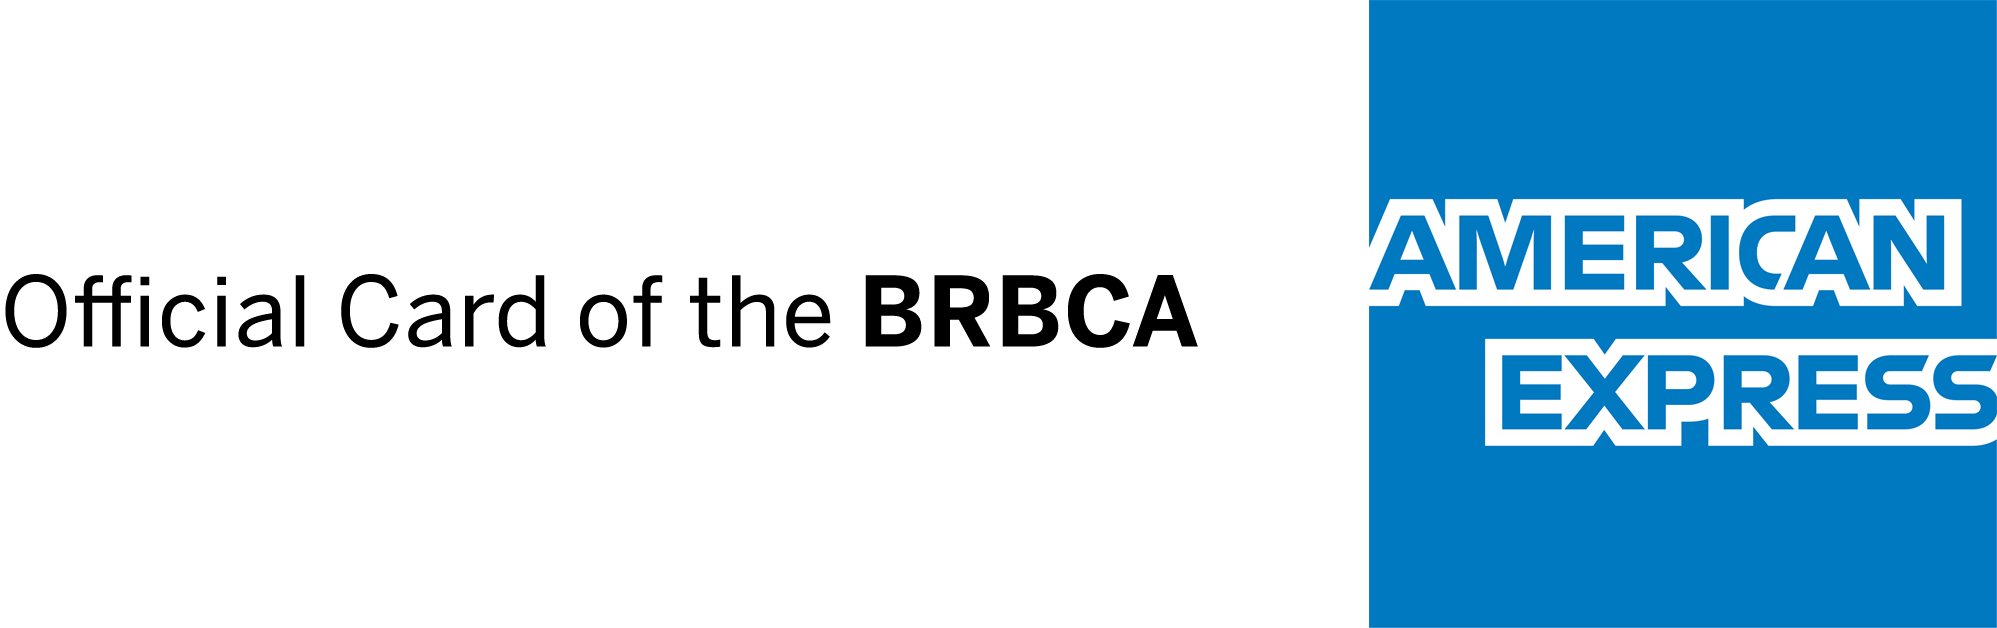 أمريكان إكسبريس شعار PNG صور